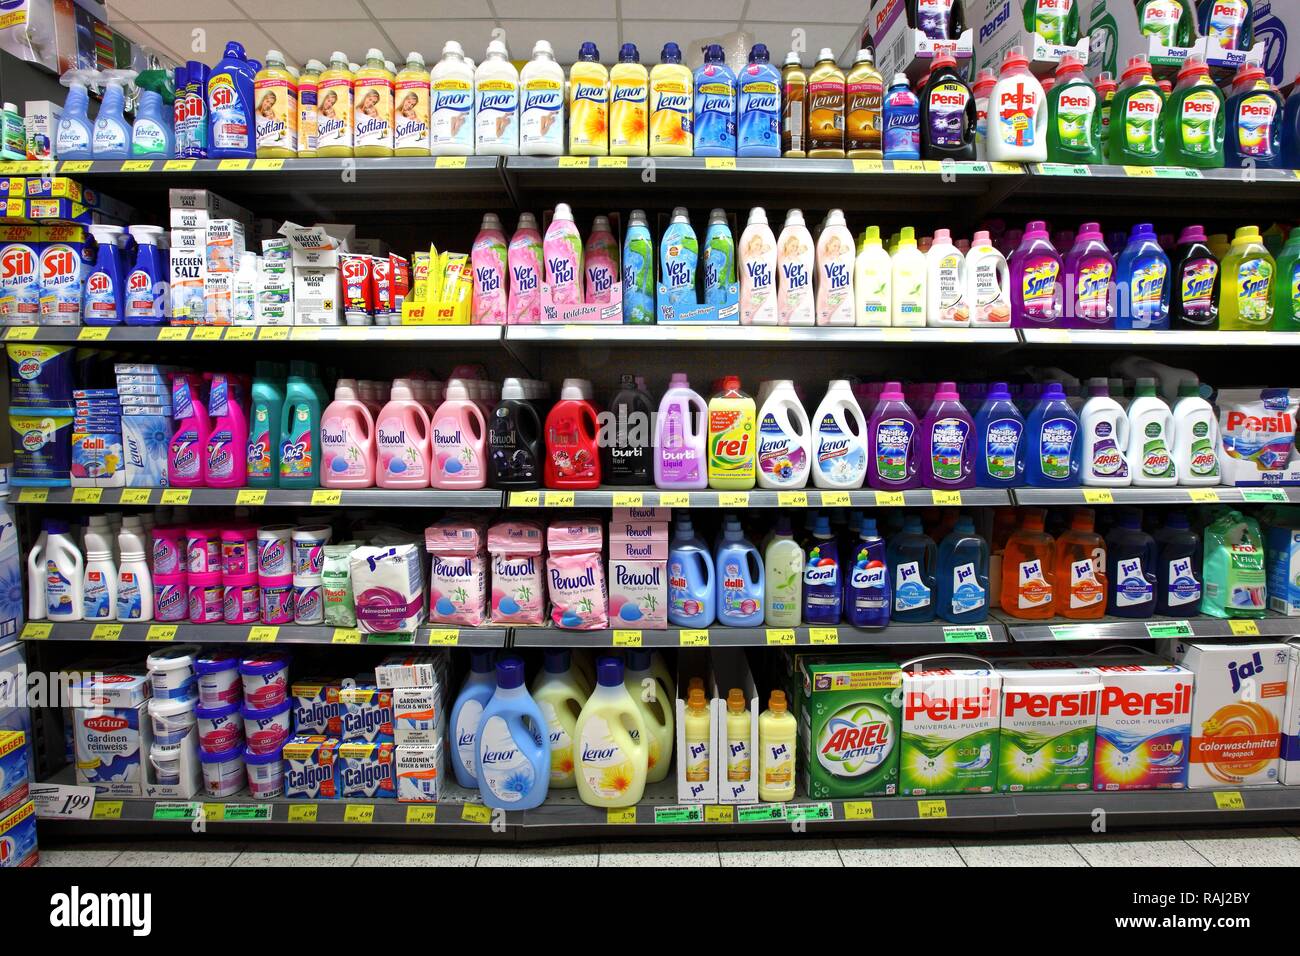 Detersivi, self-service, supermercato Foto stock - Alamy